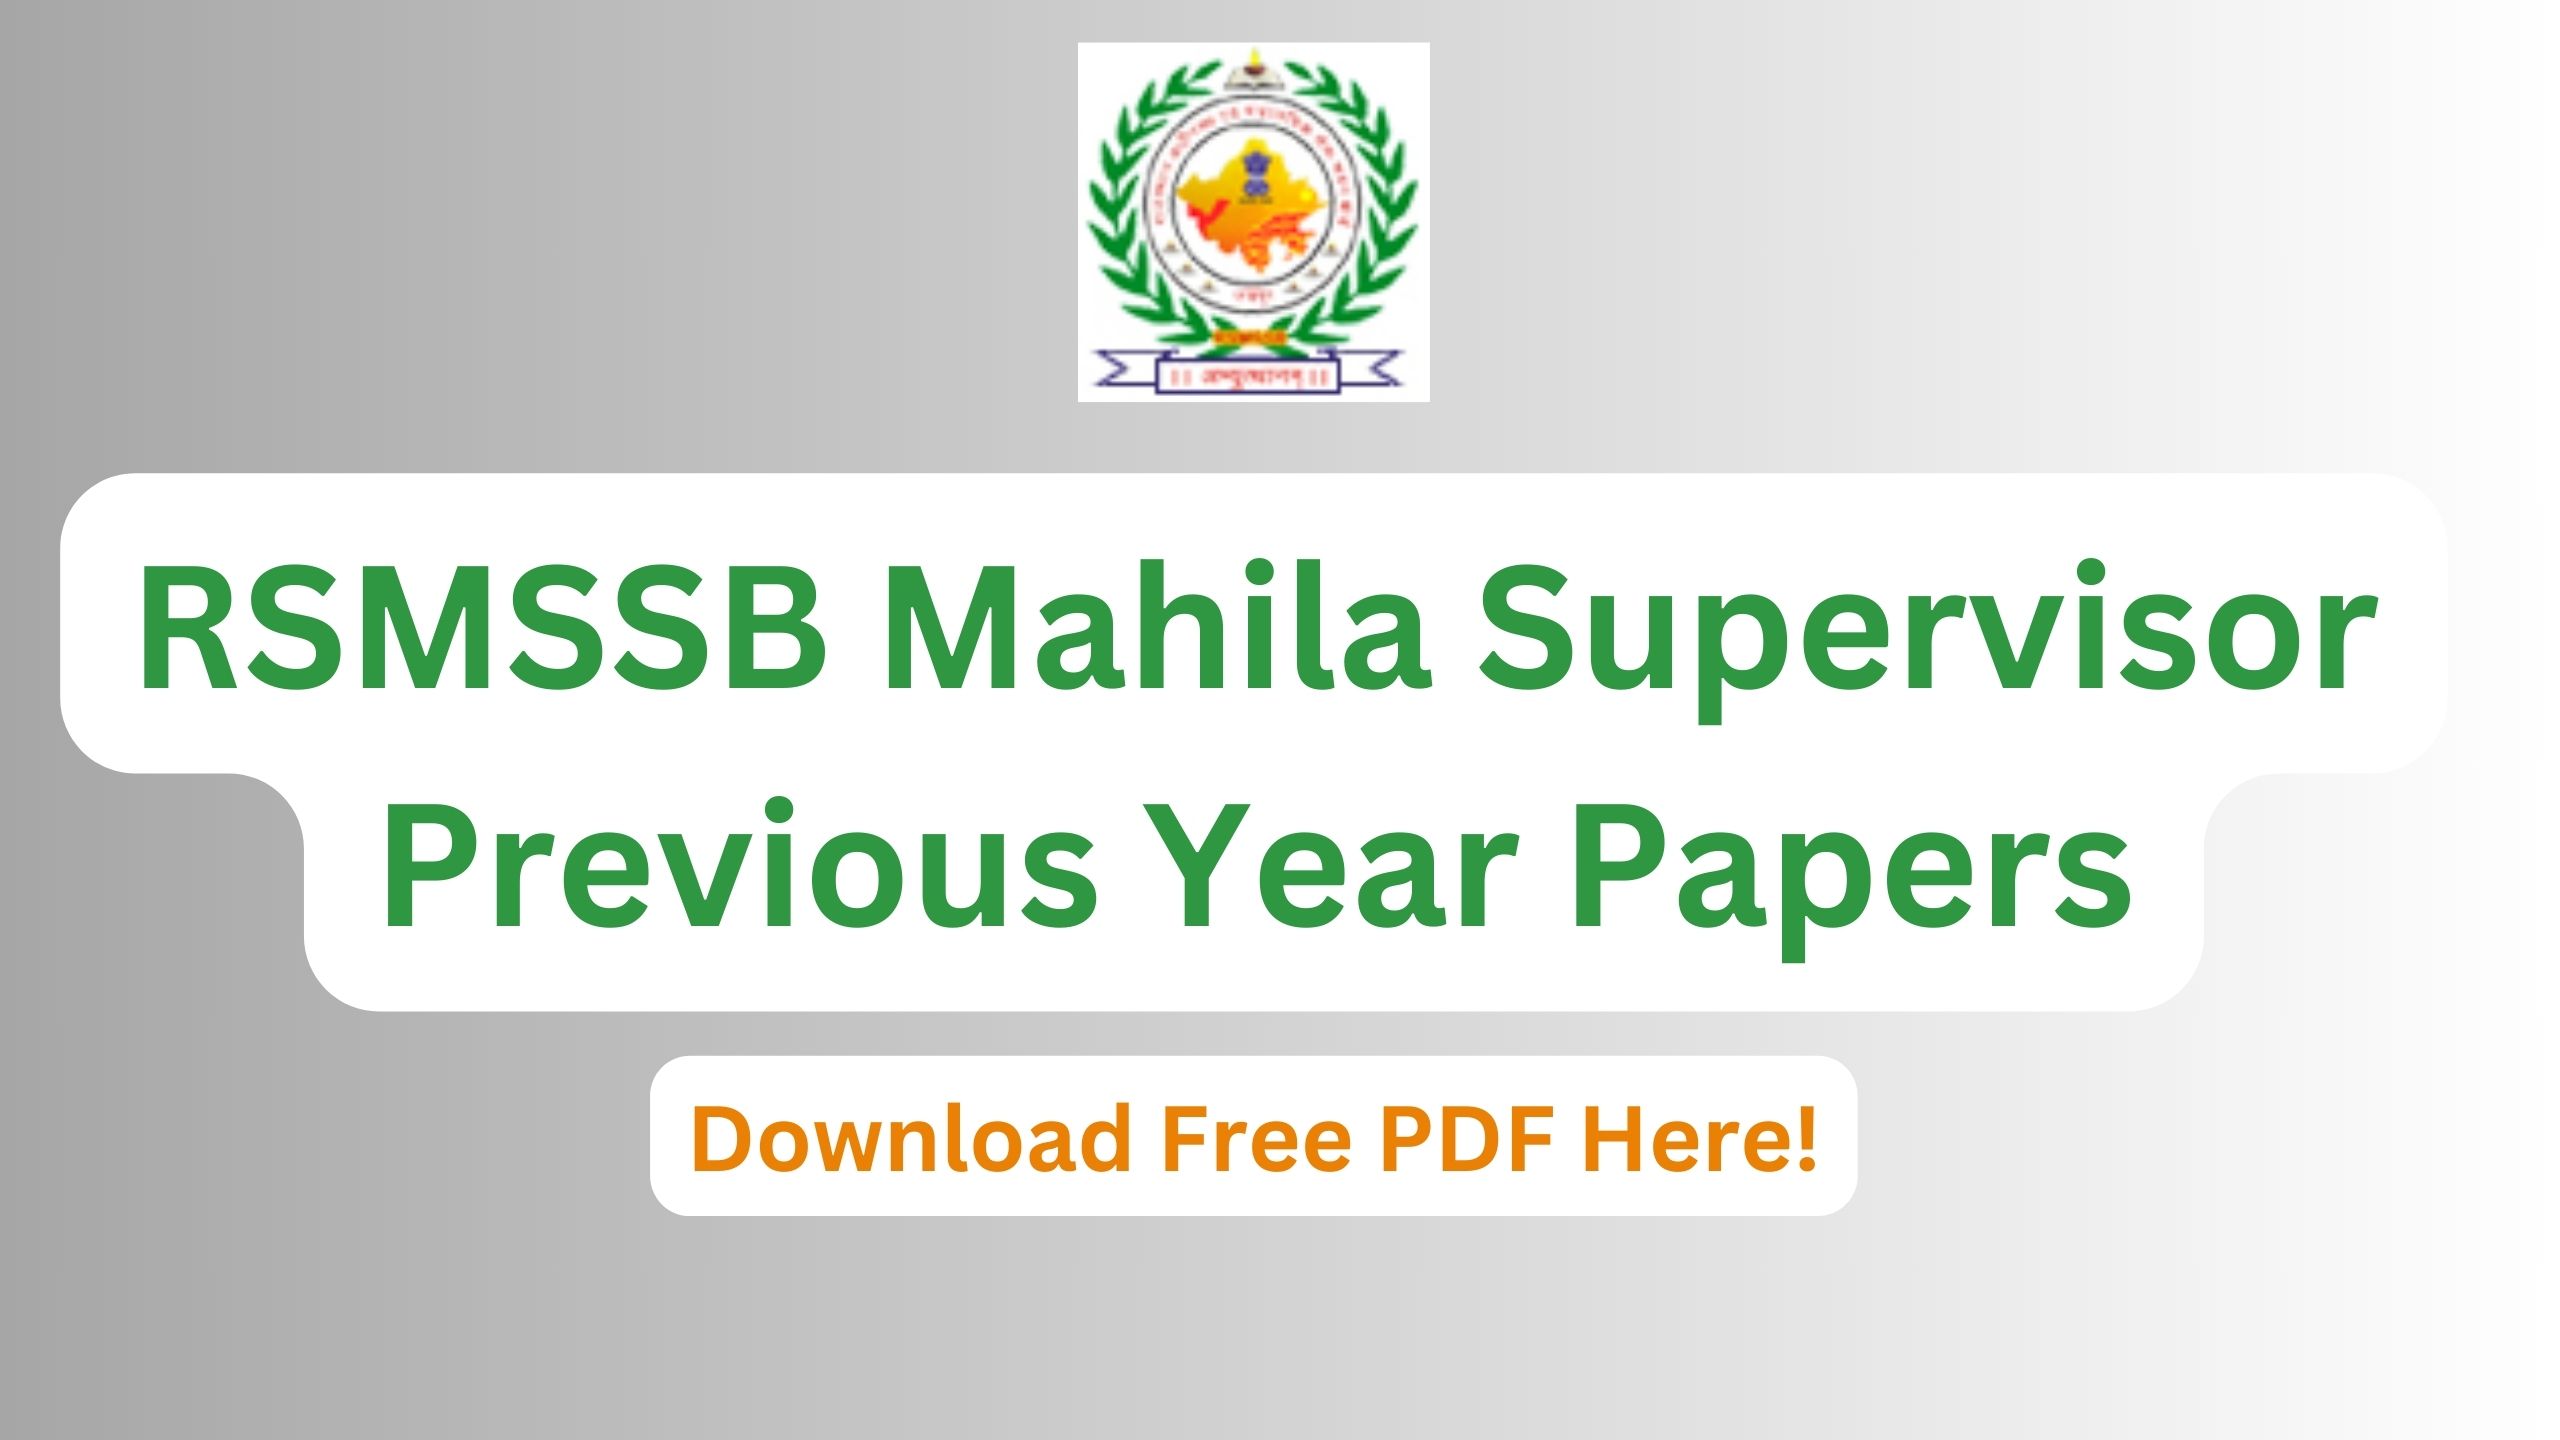 RSMSSB Mahila Supervisor Previous Year Papers